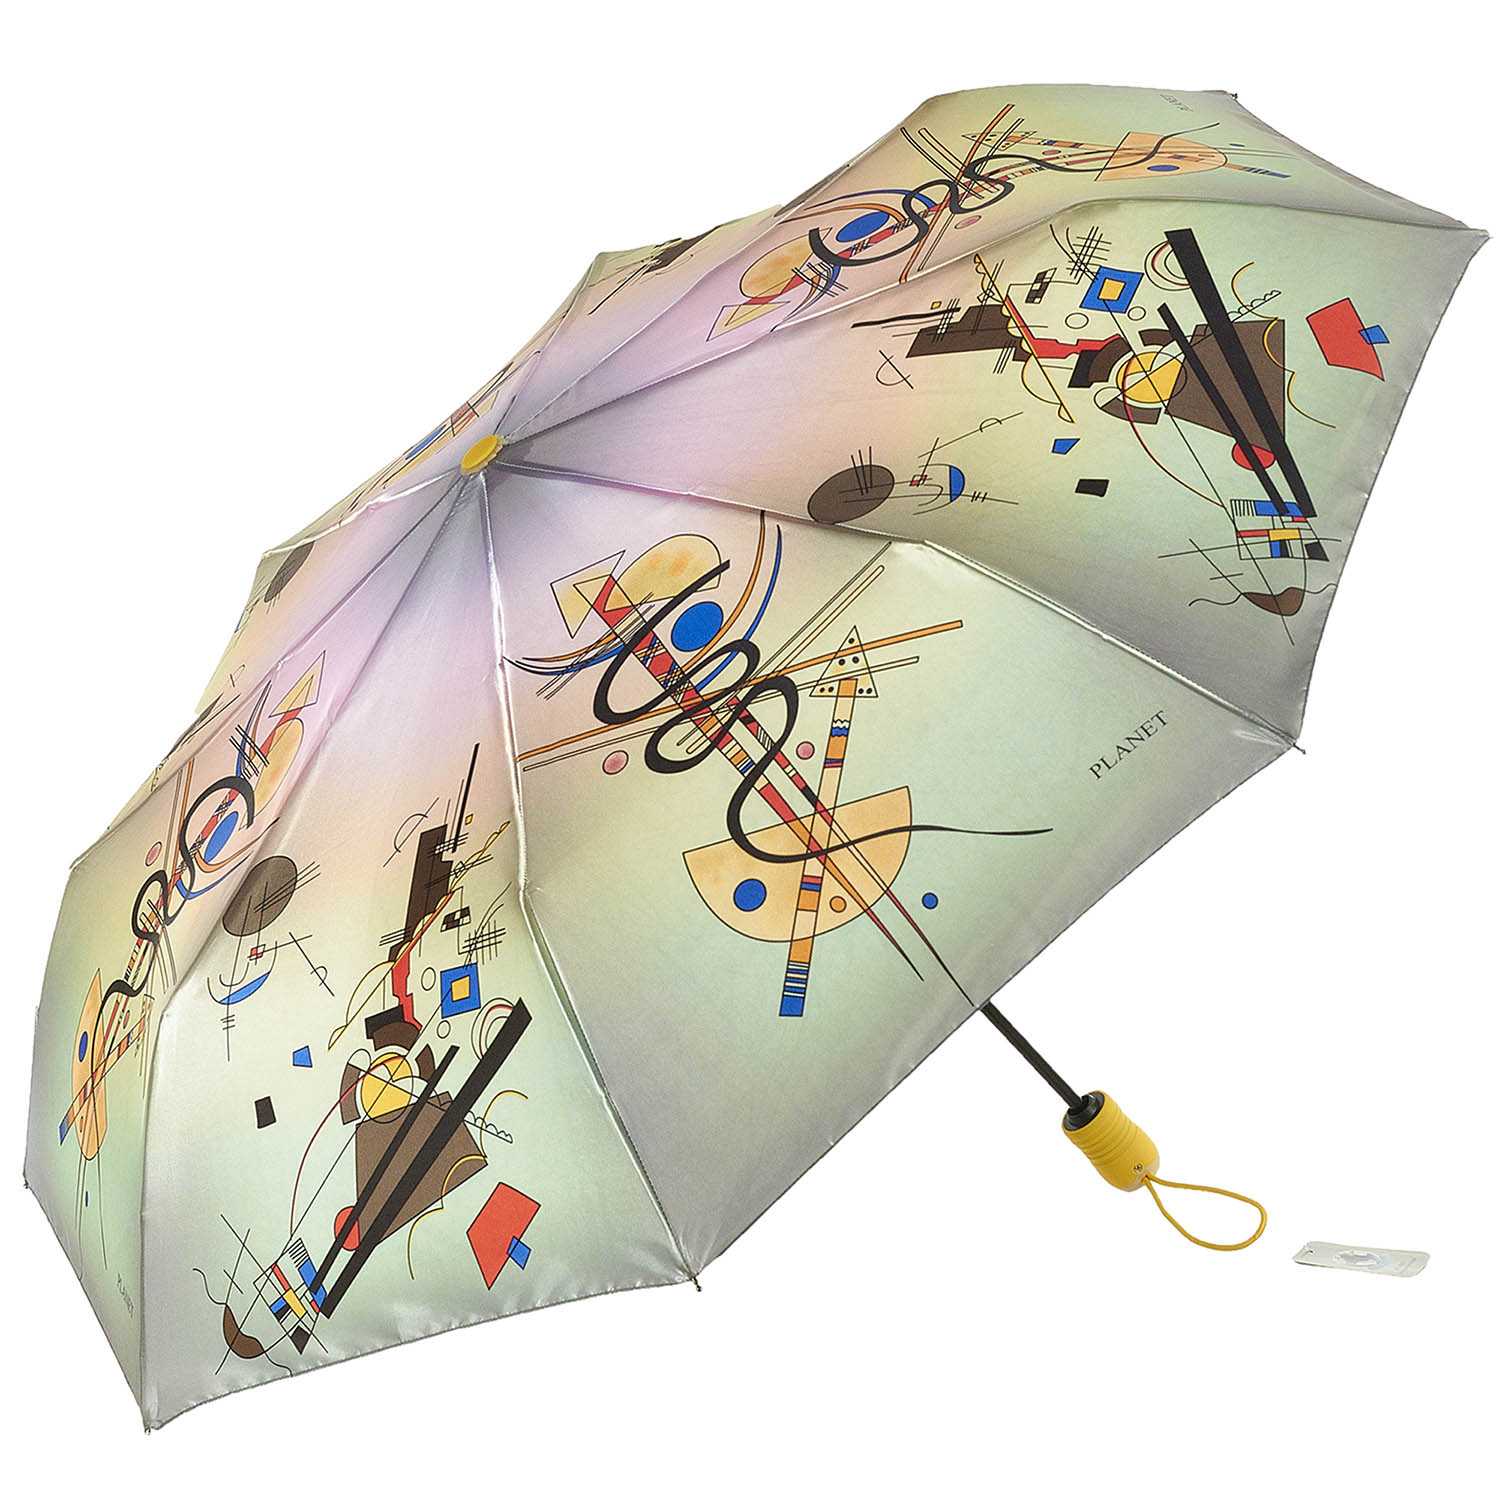 Купить зонтик на озоне. Зонт Zontaly 913 16248. RN 114837 зонт. Japan Pat 124153 зонт. Fulton зонт вайлдберриз.